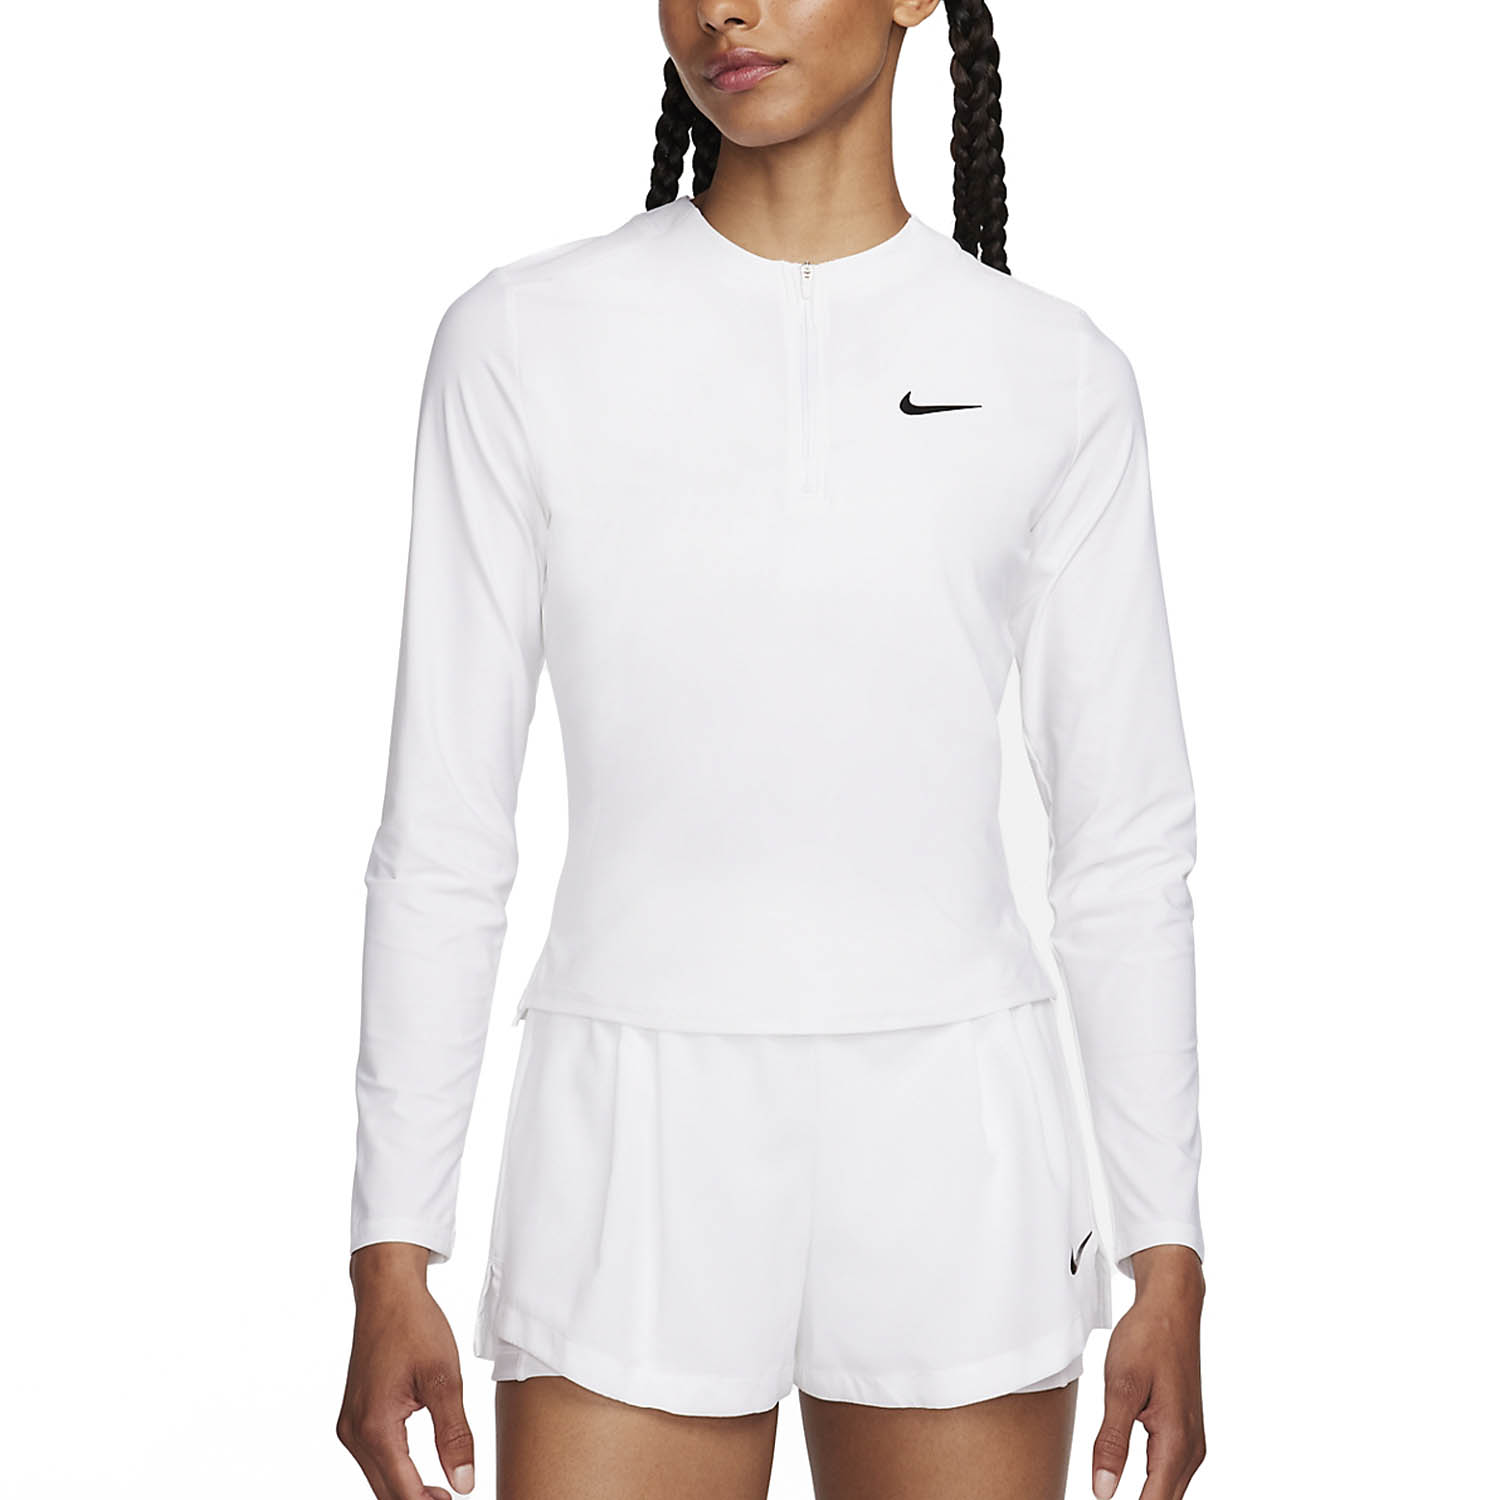 Nike Advantage Shirt - White/Black